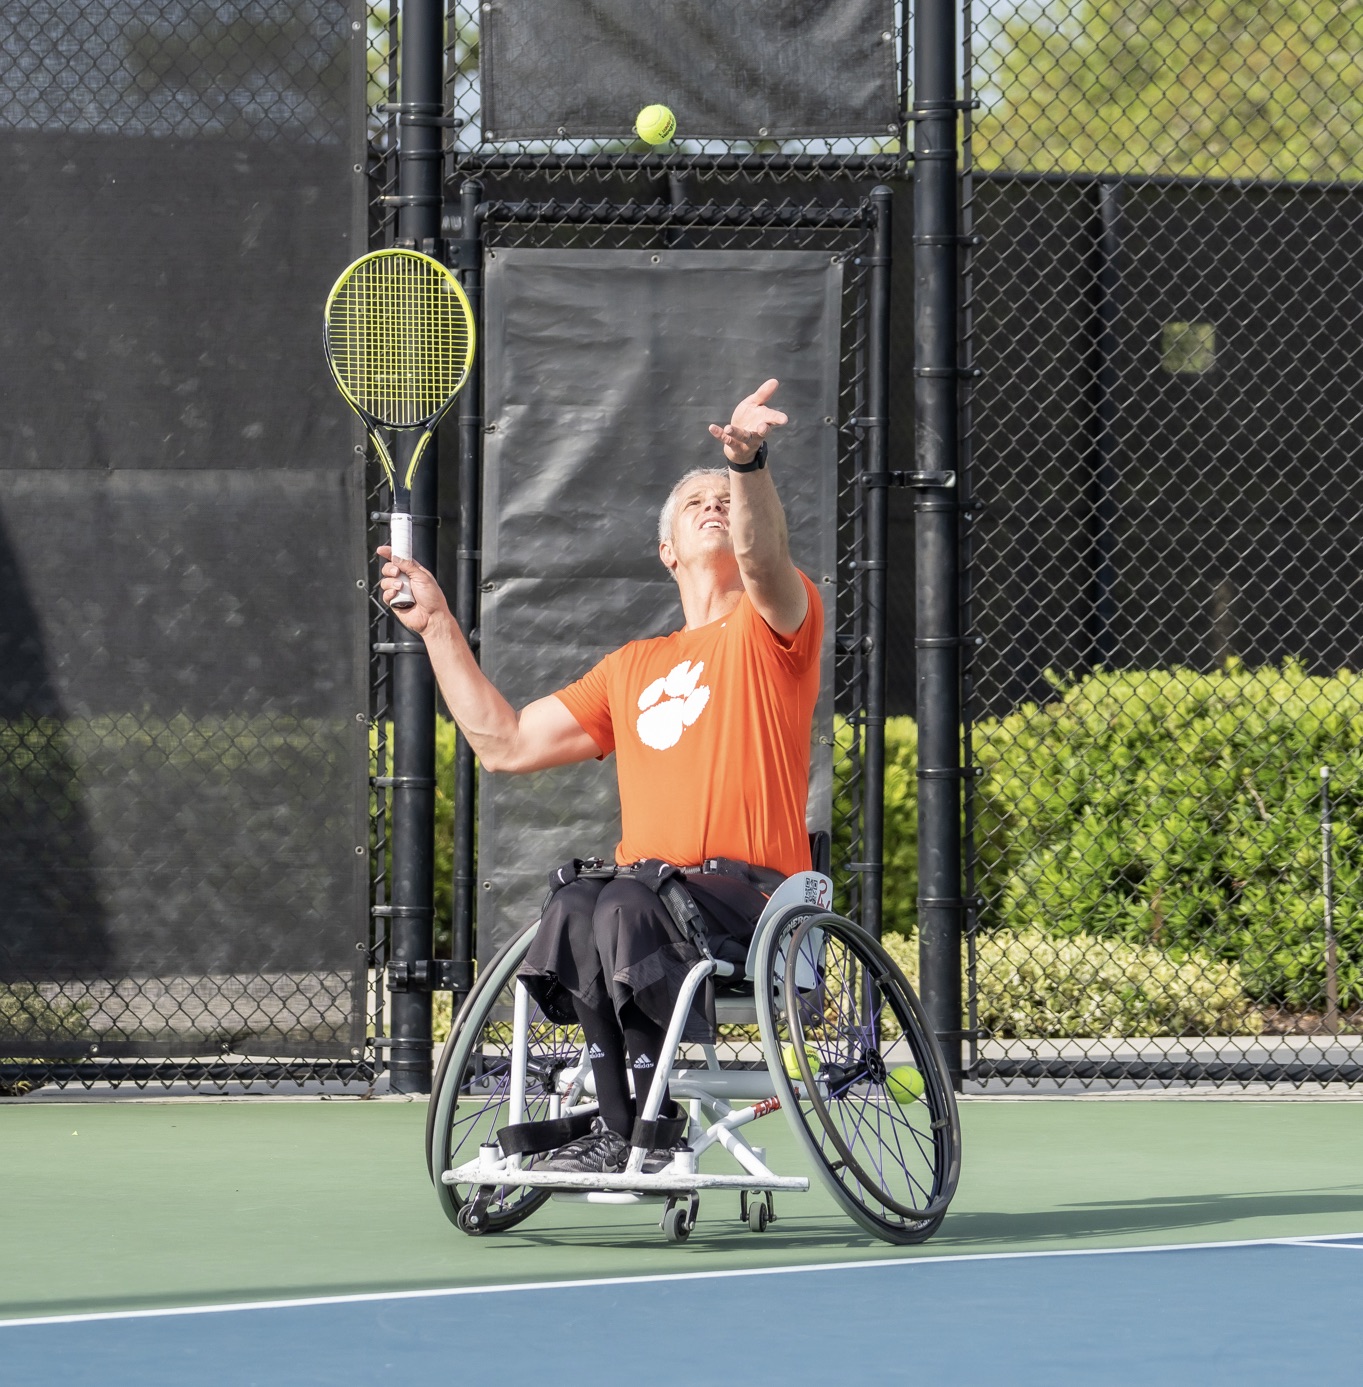 Jeff Townsend, Wheelchair Tennis Team members